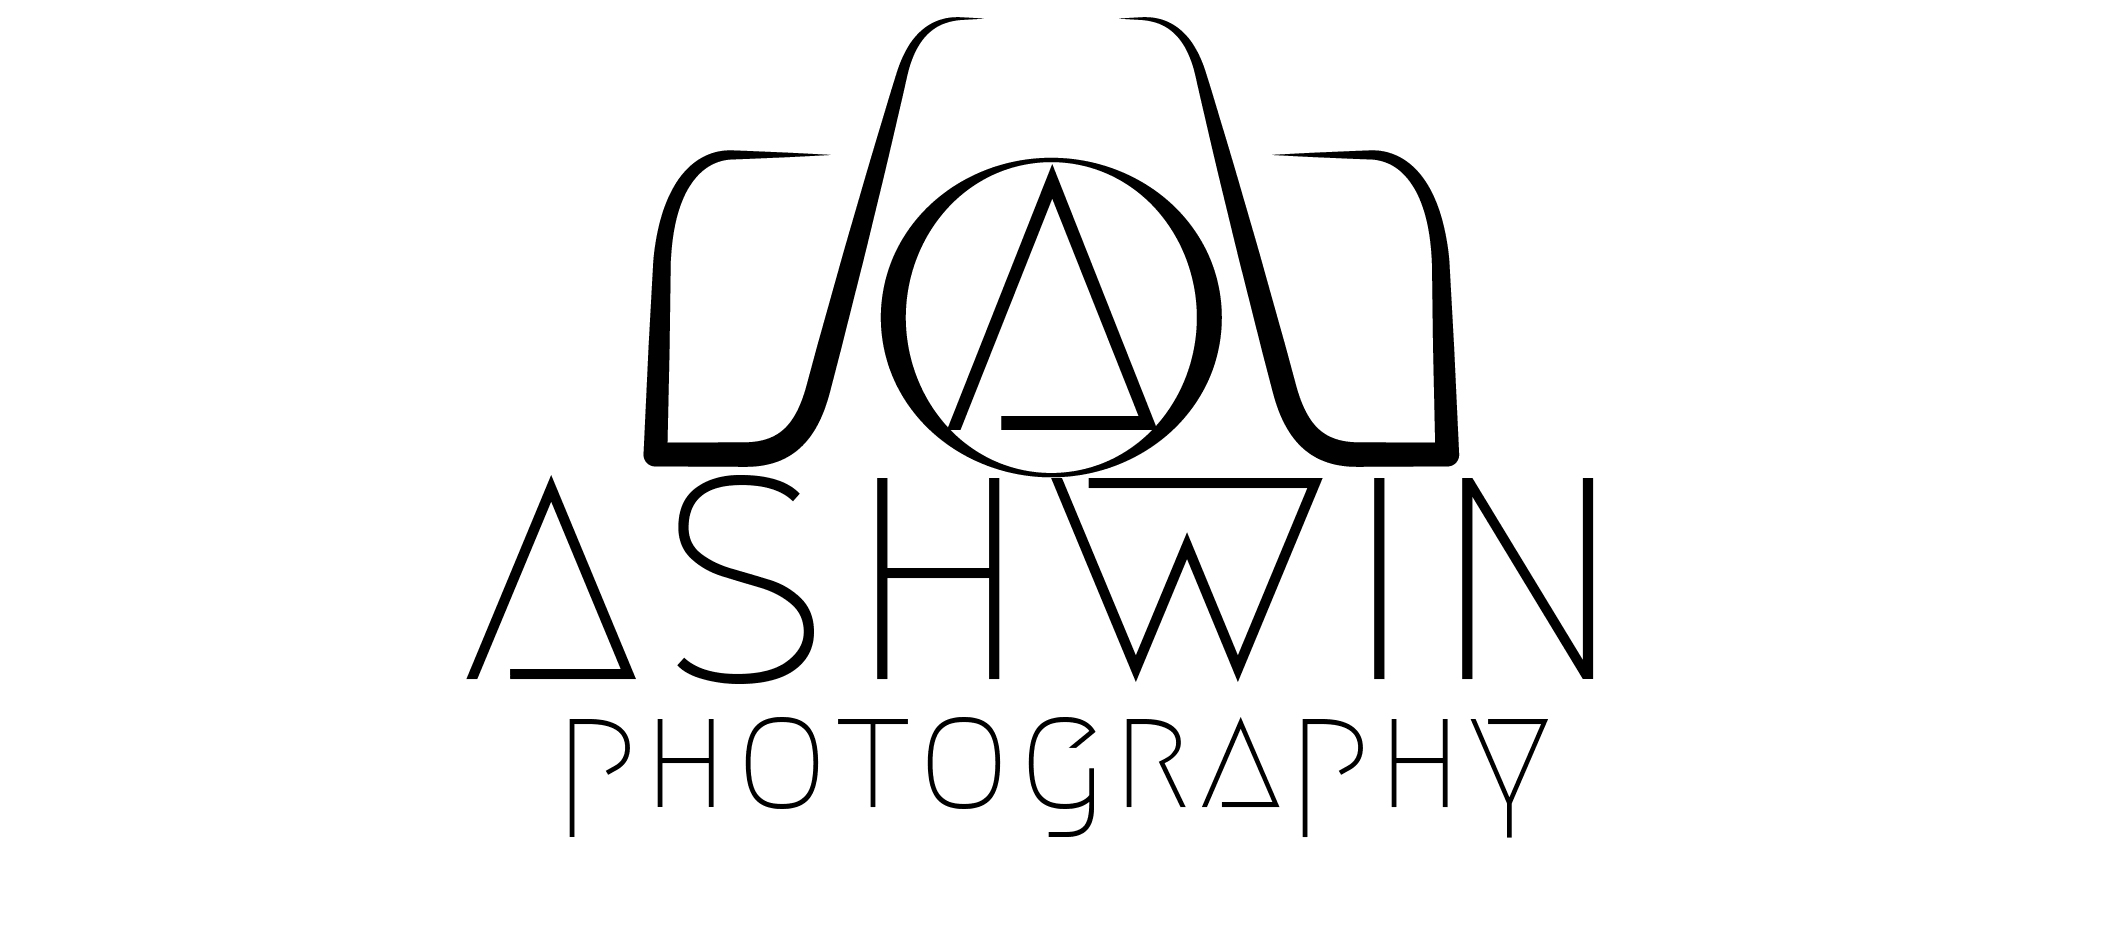 ashwin creation - Actor - Actor-Director | LinkedIn